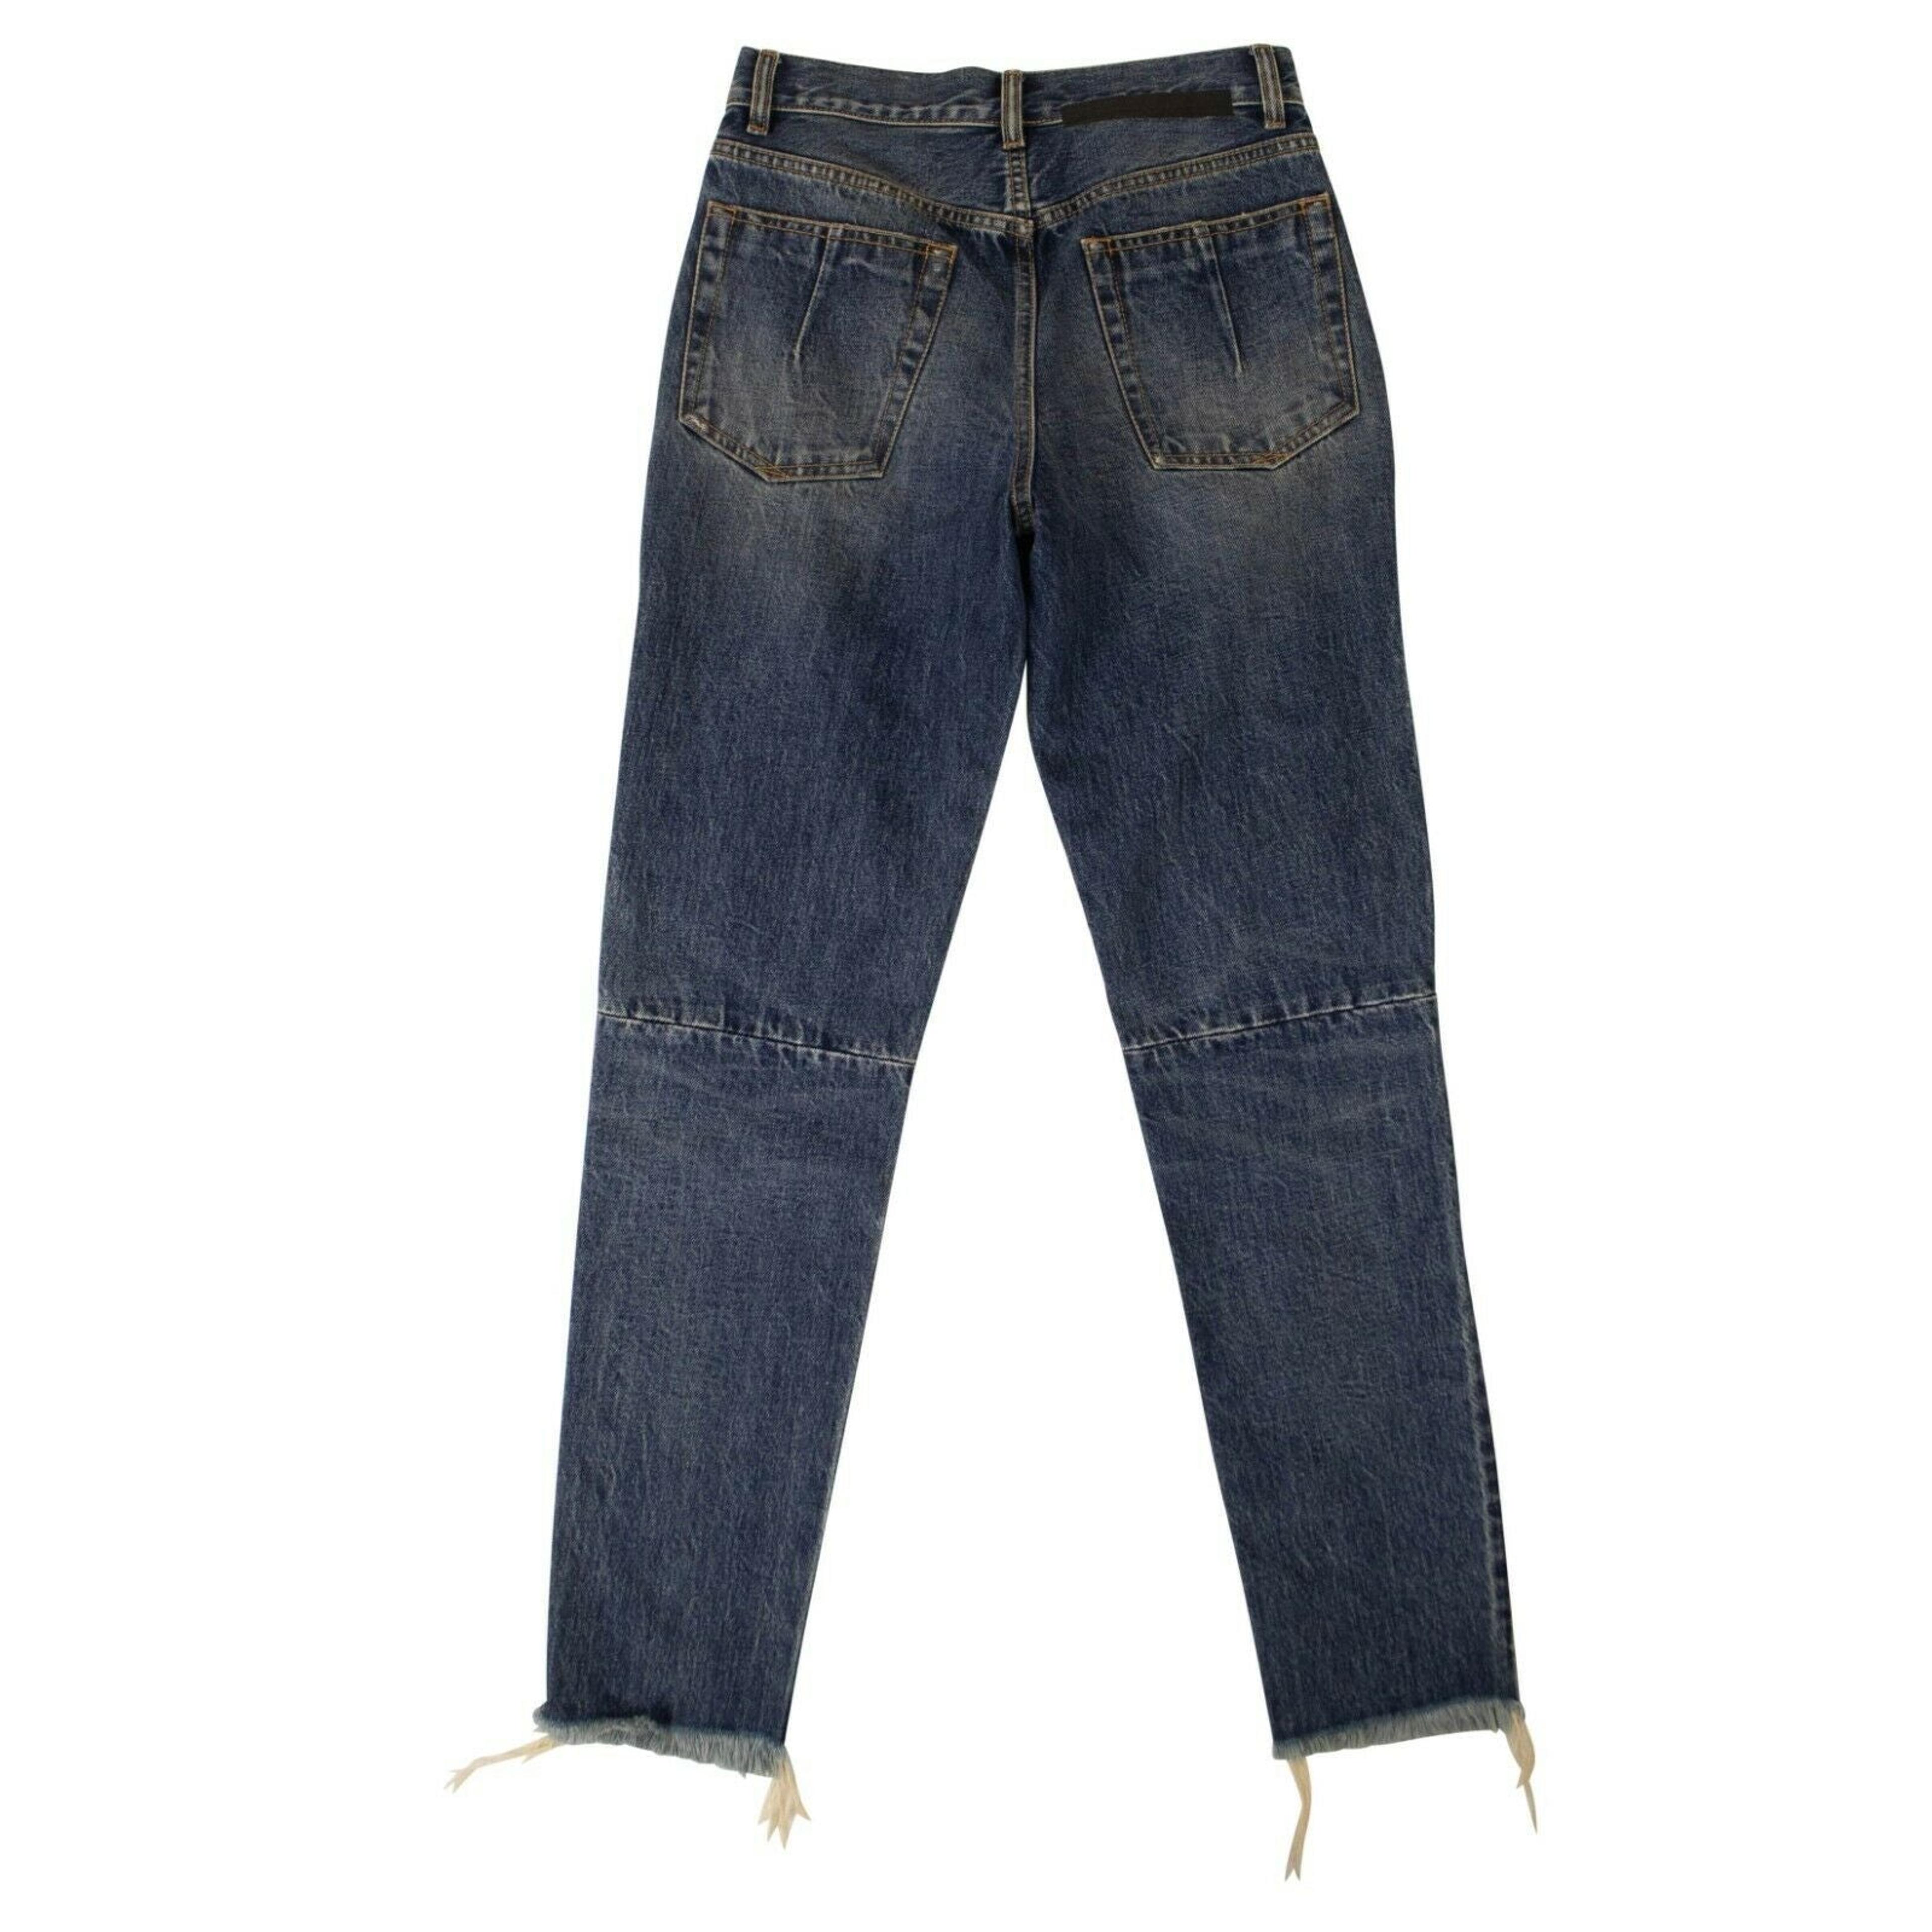 Alternate View 1 of Unravel Project Five Pocket Design Jeans Pants - Blue